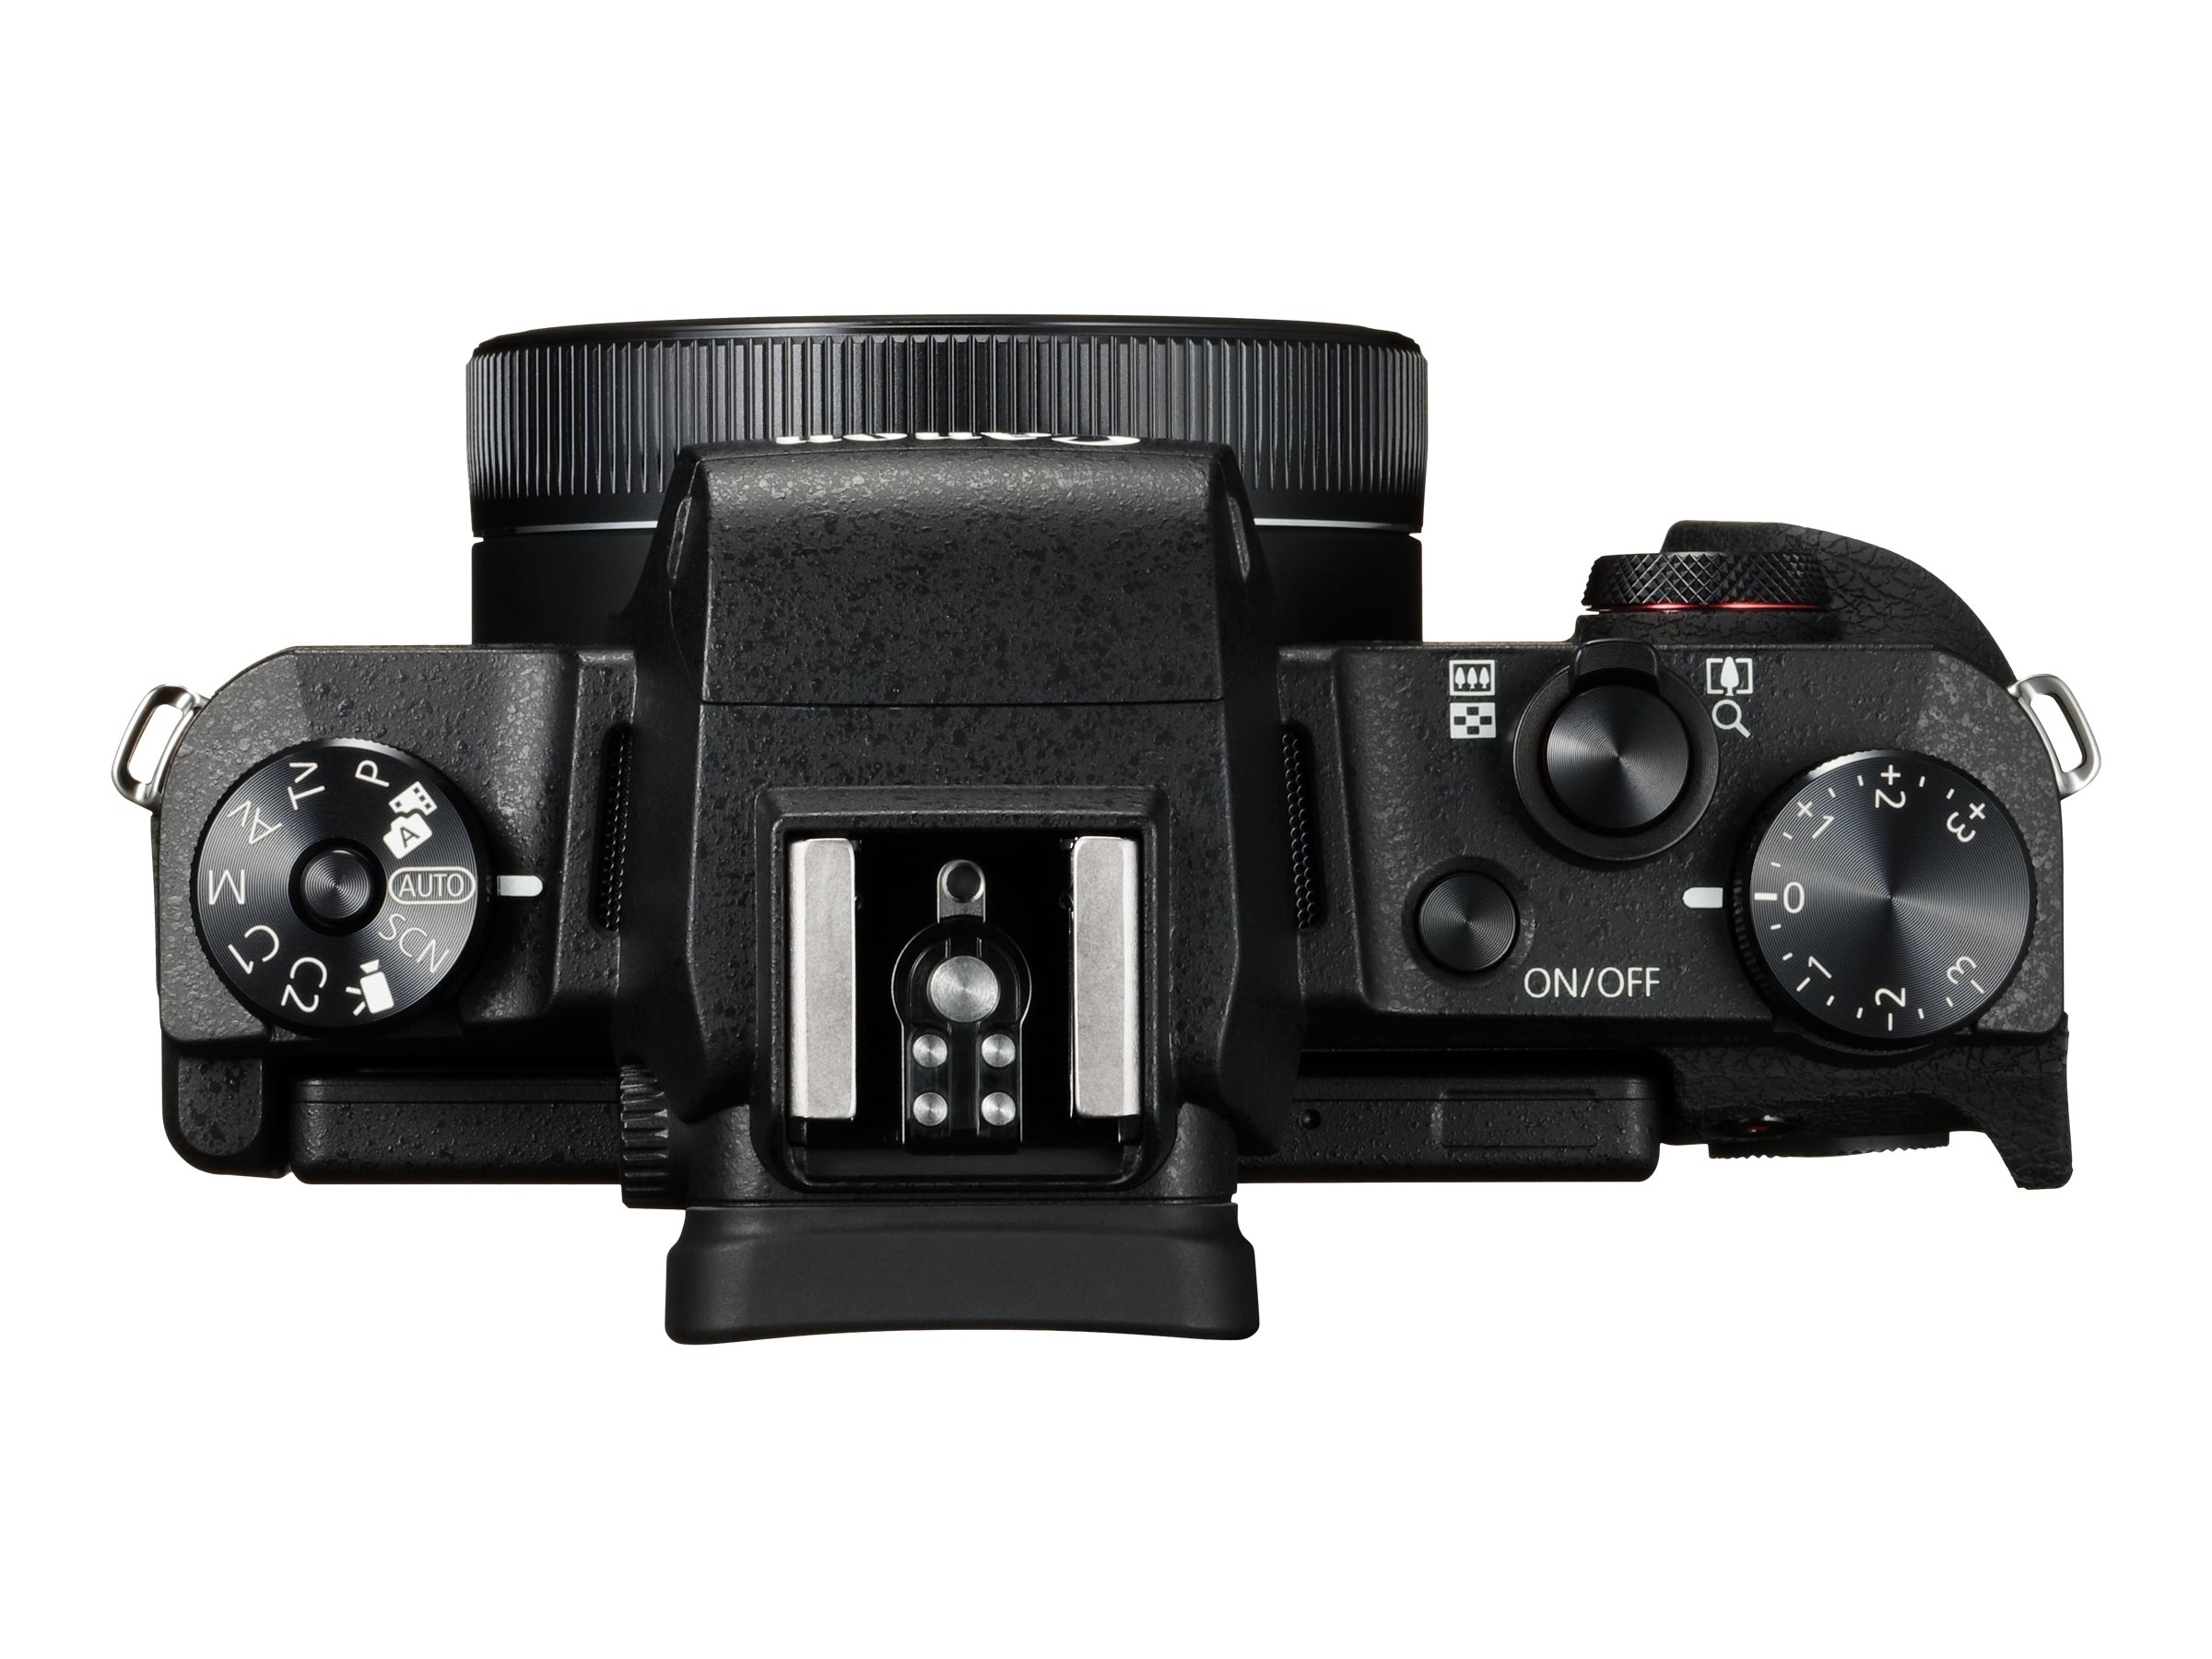 Canon PowerShot G1 X Mark III - Digital camera - compact - 24.2 MP - APS-C - 1080p / 60 fps - 3x optical zoom - Wireless LAN, NFC, Bluetooth - image 3 of 7